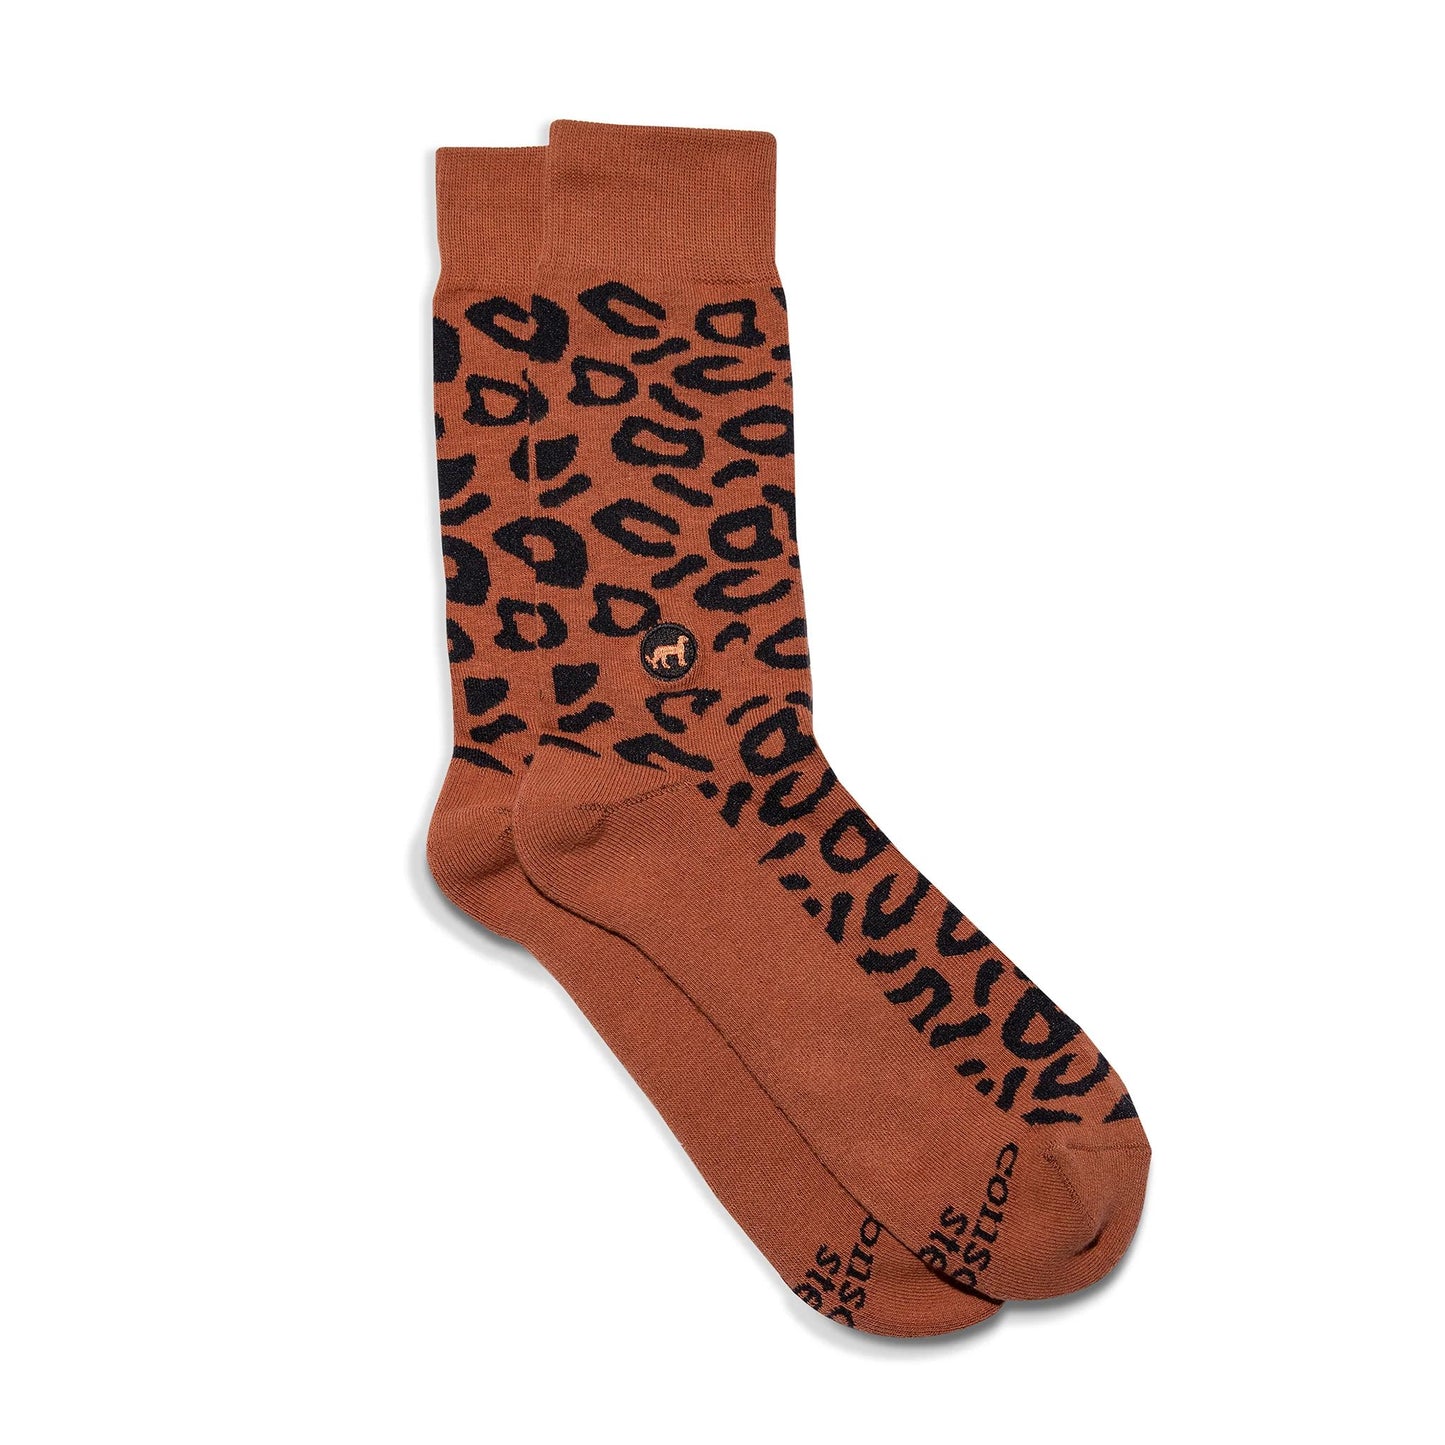 Men's Socks That Protect Cheetahs - Rust Leopard Print | Fair Trade | Fits Men's Sizes 8.5-13